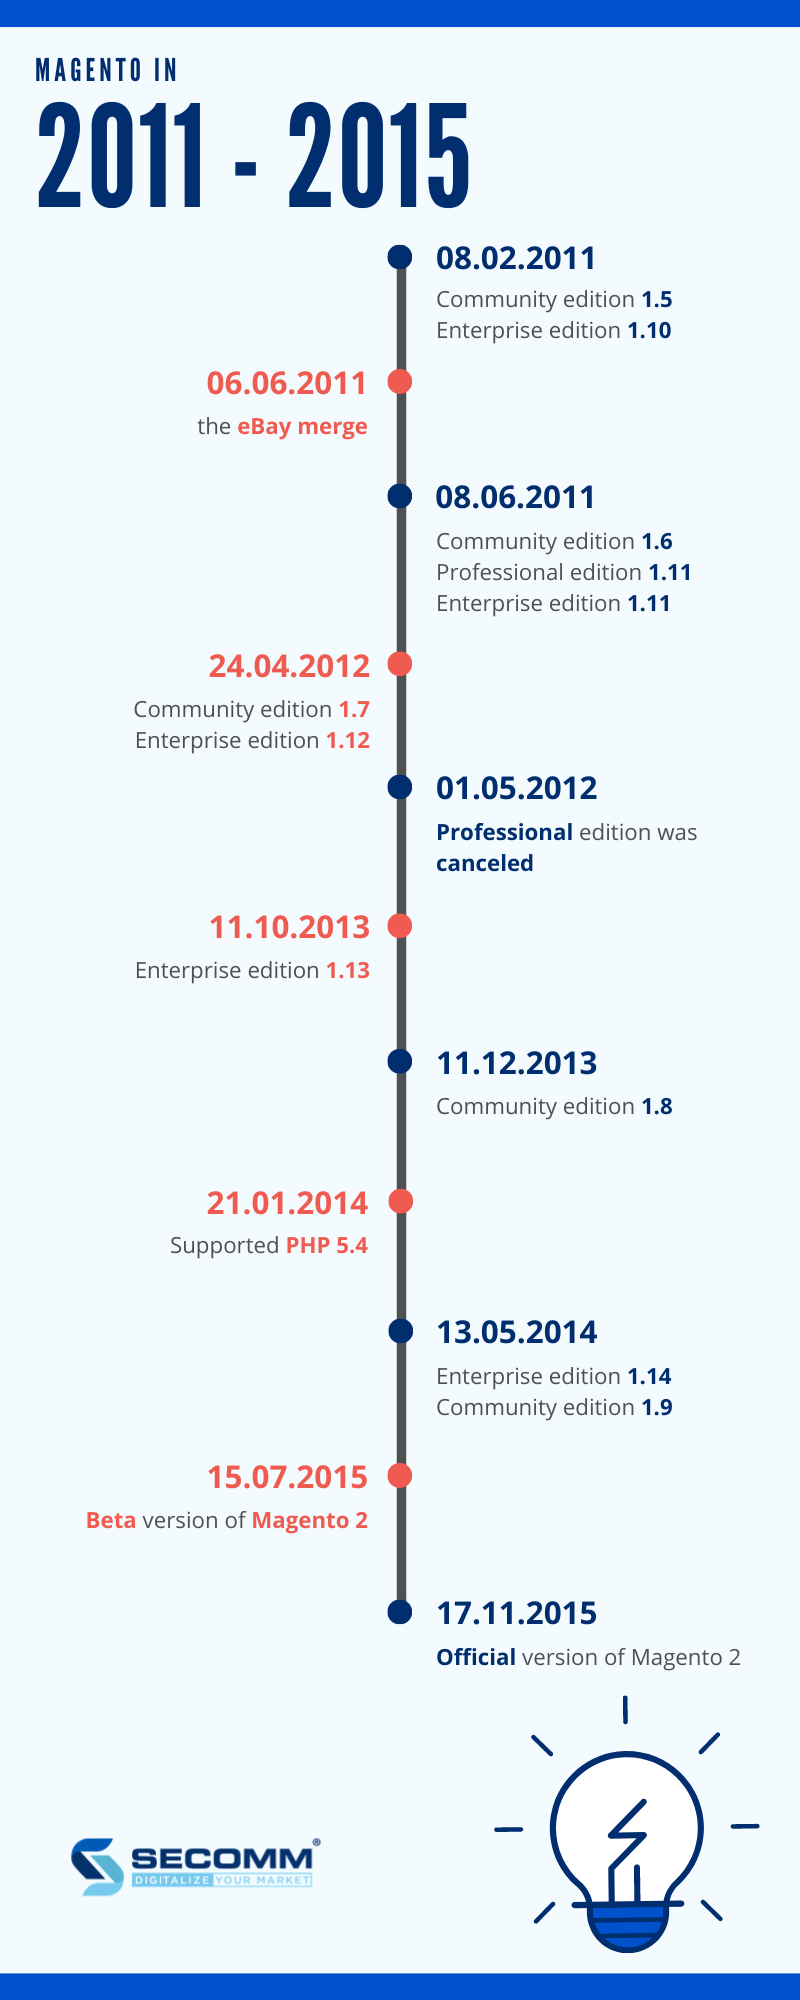 Magento timeline 2011 - 2015